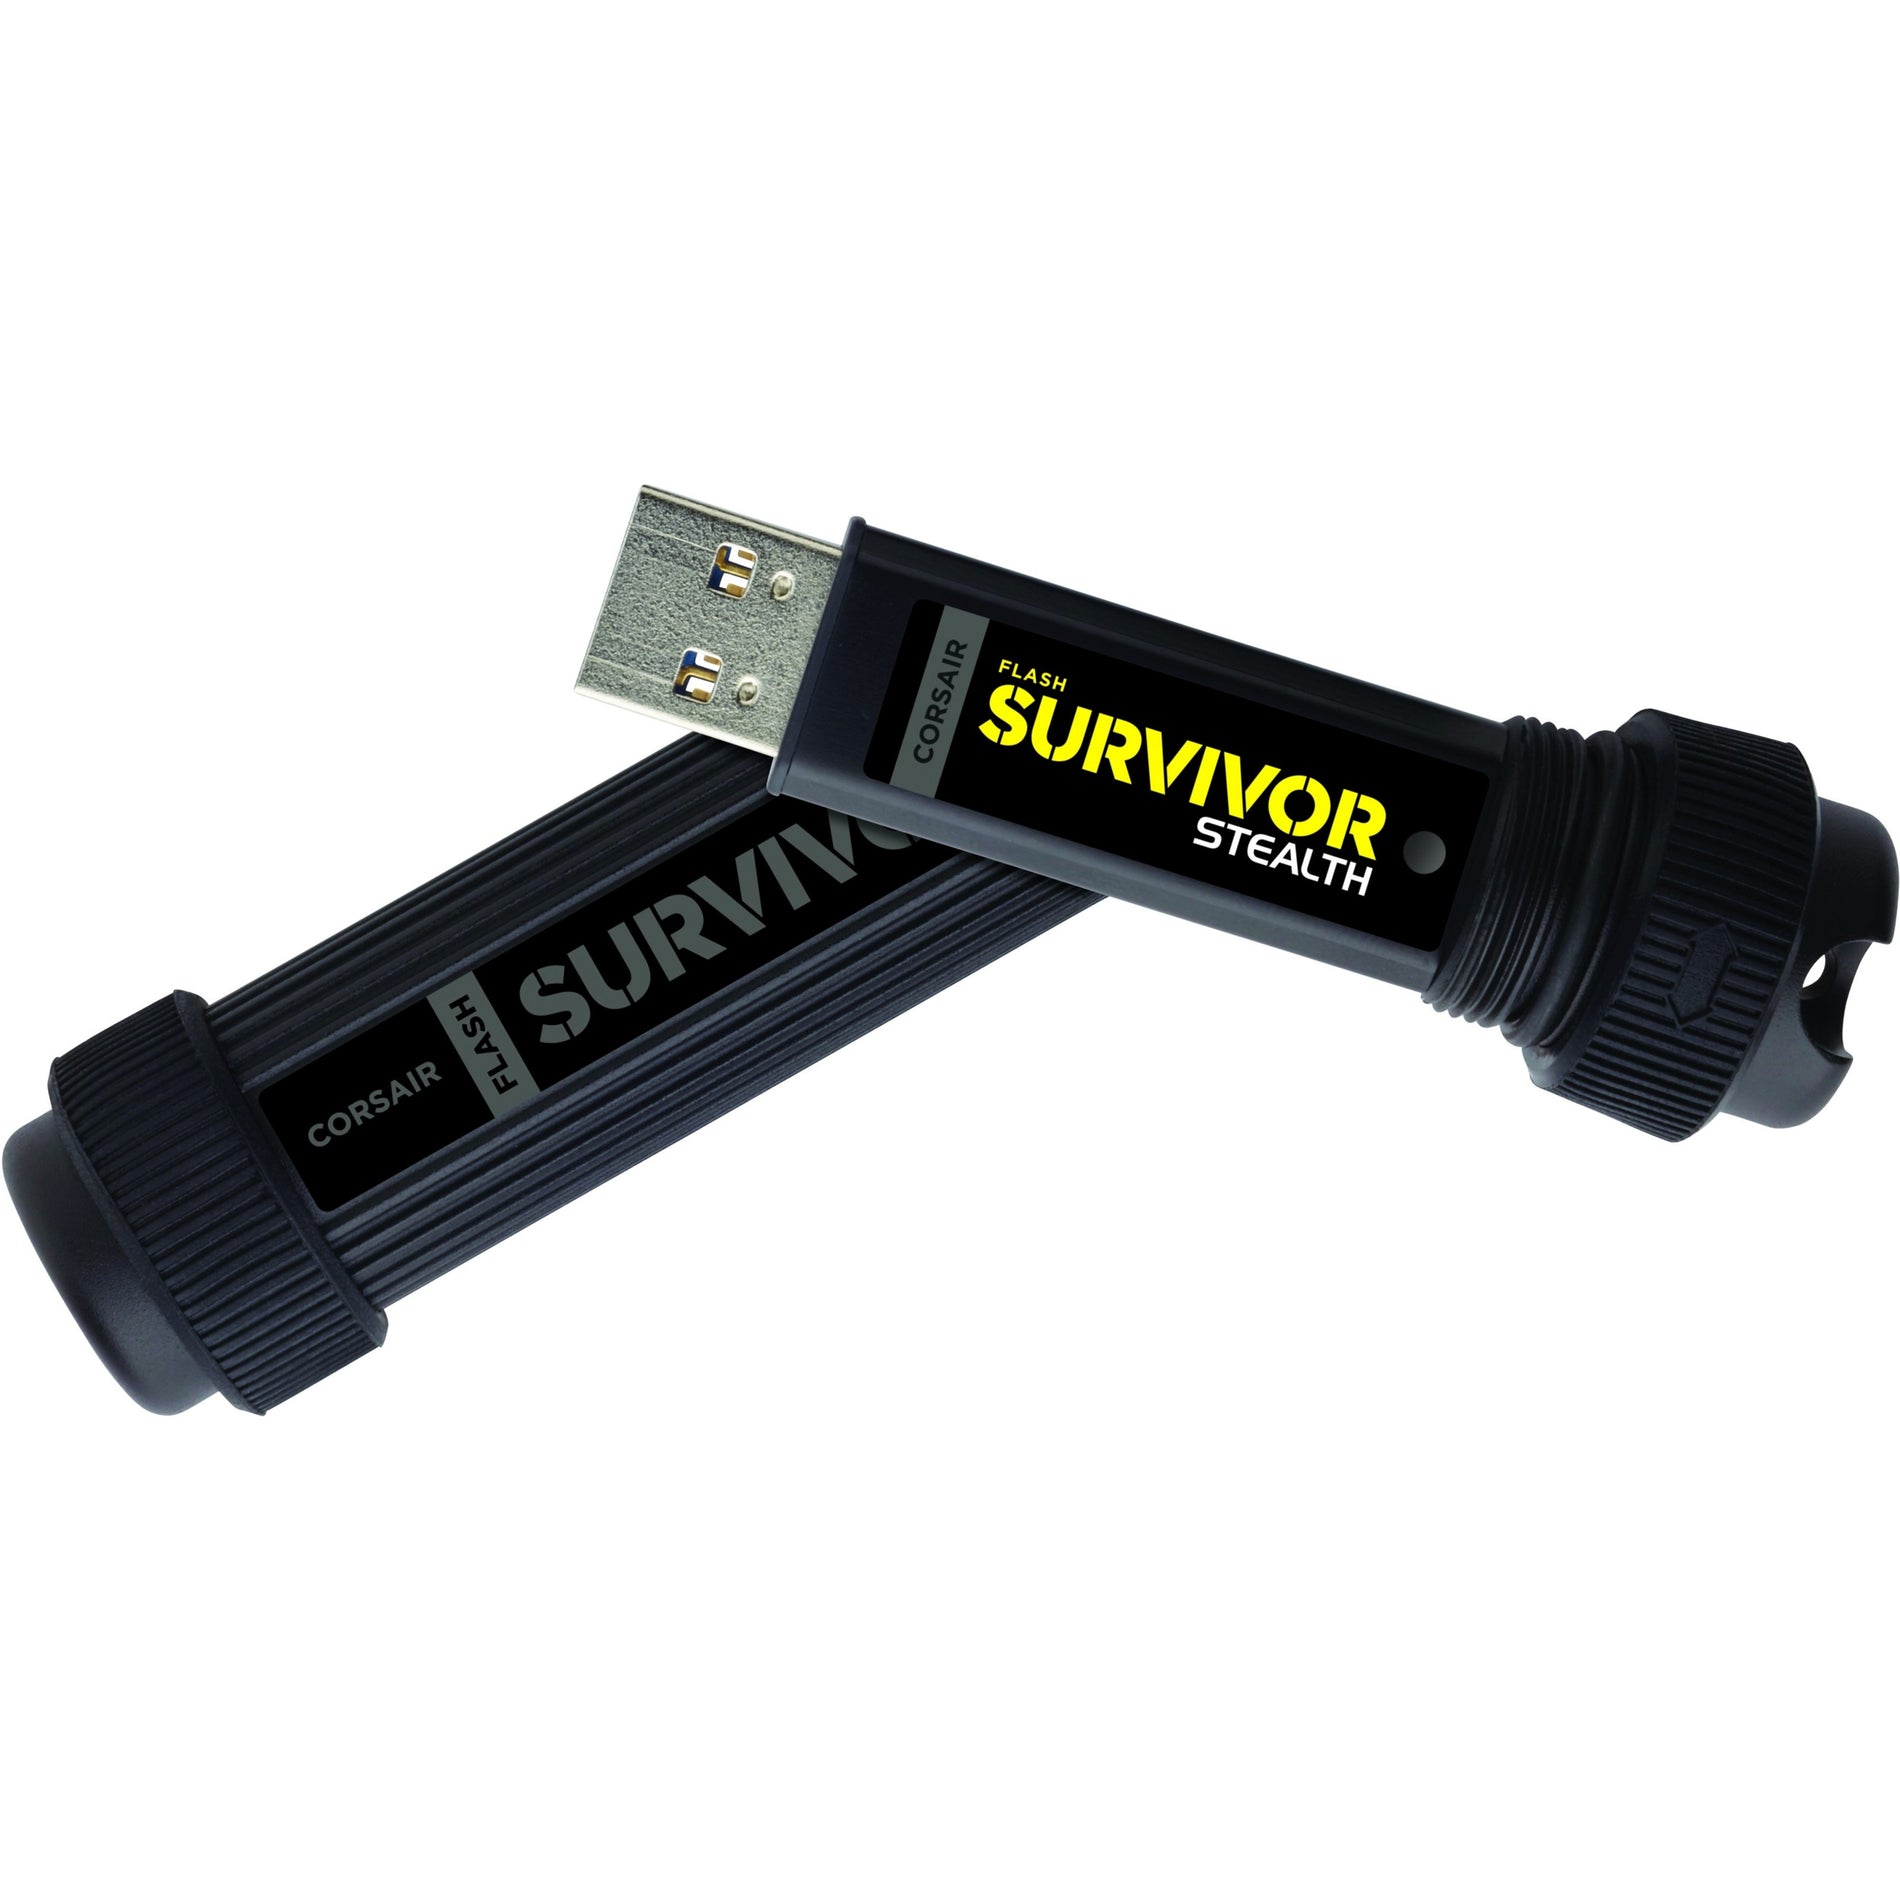 Corsair CMFSS3B-256GB Flash Survivor Stealth 256GB USB 3.0 Flash Drive, Durable and Secure Storage Solution